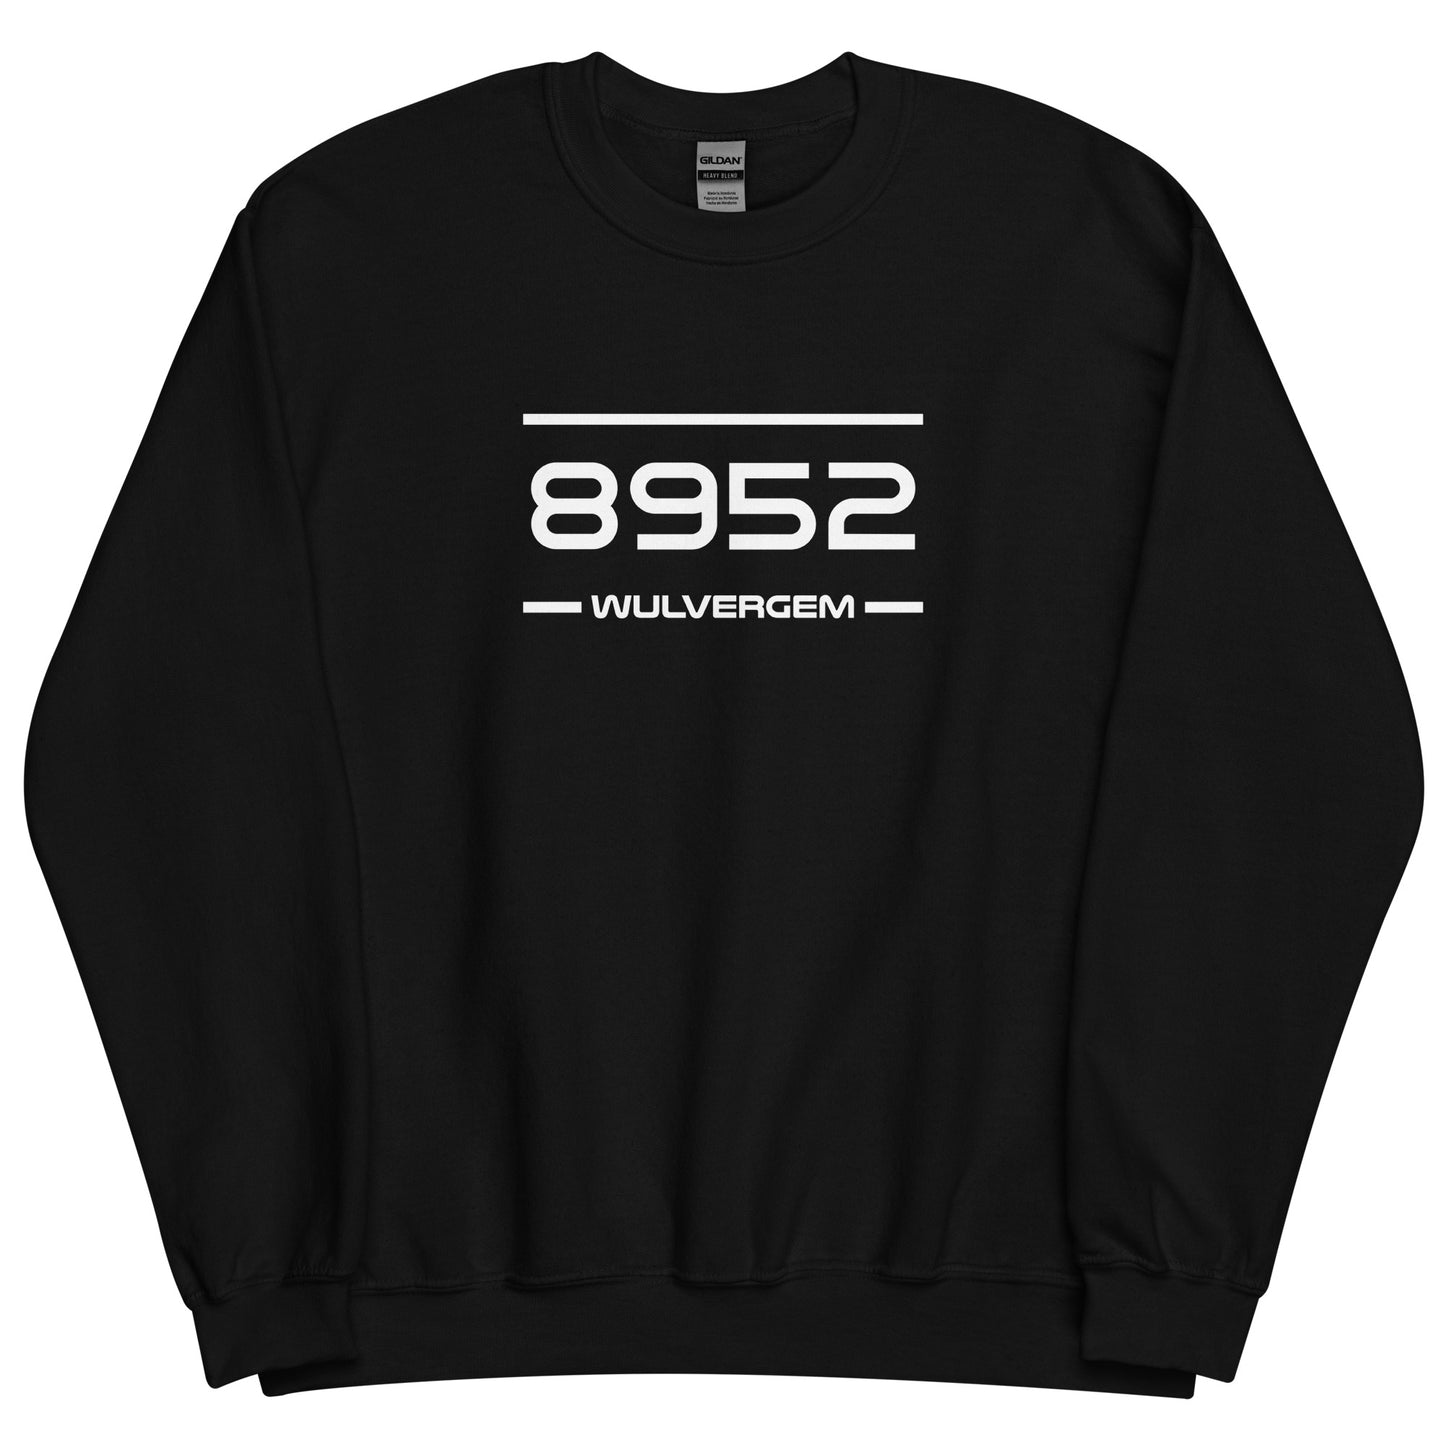 Sweater - 8952 - Wulvergem (M/V)